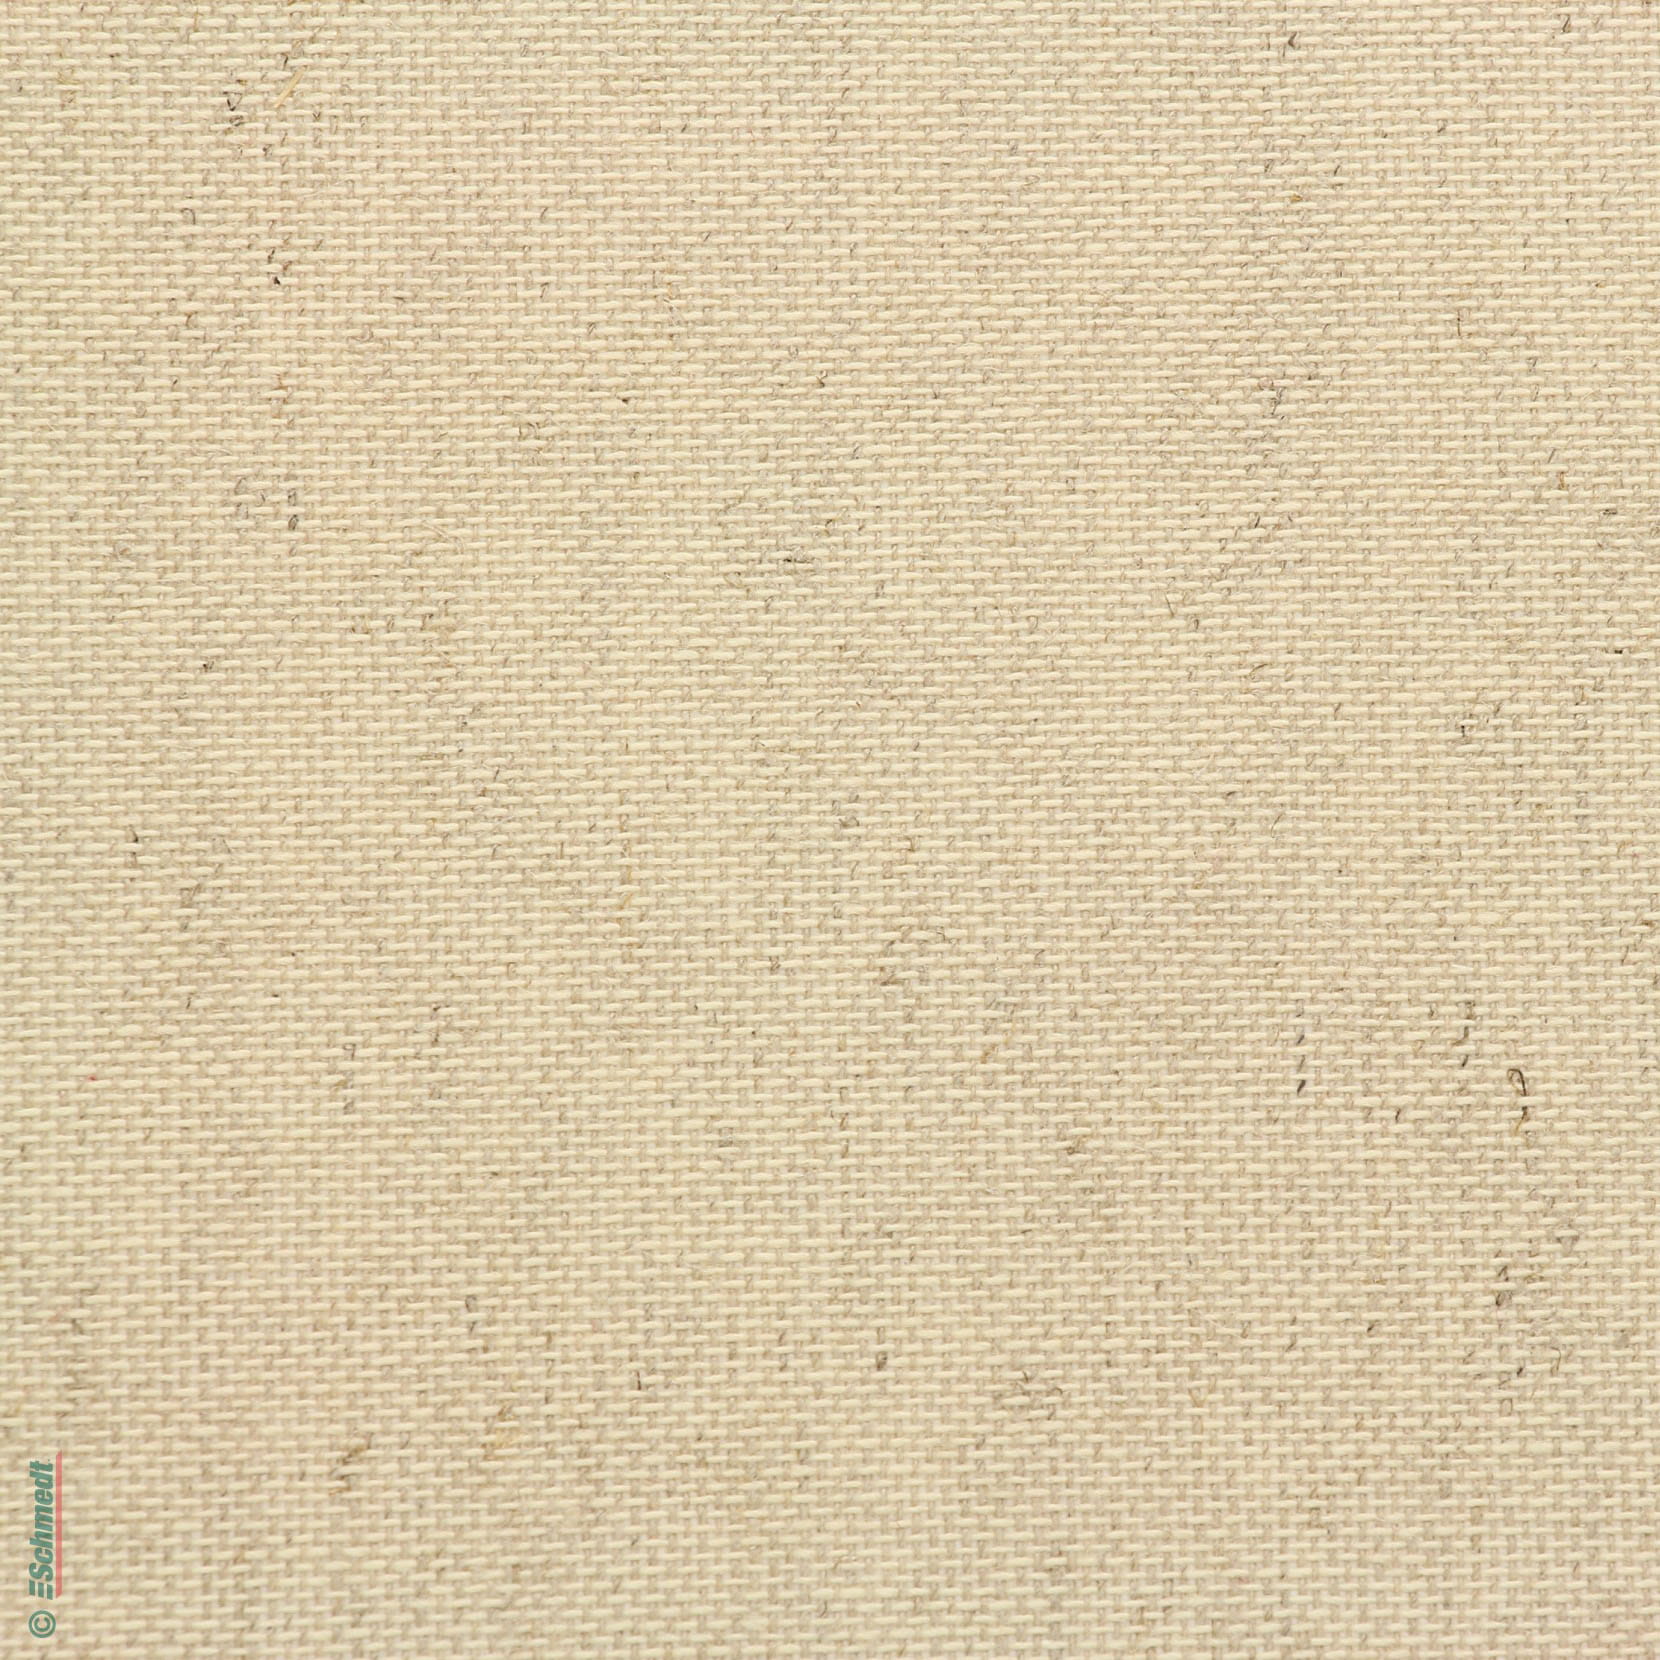 Irish Linen Bookbinding Thread: Unbleached & Colored